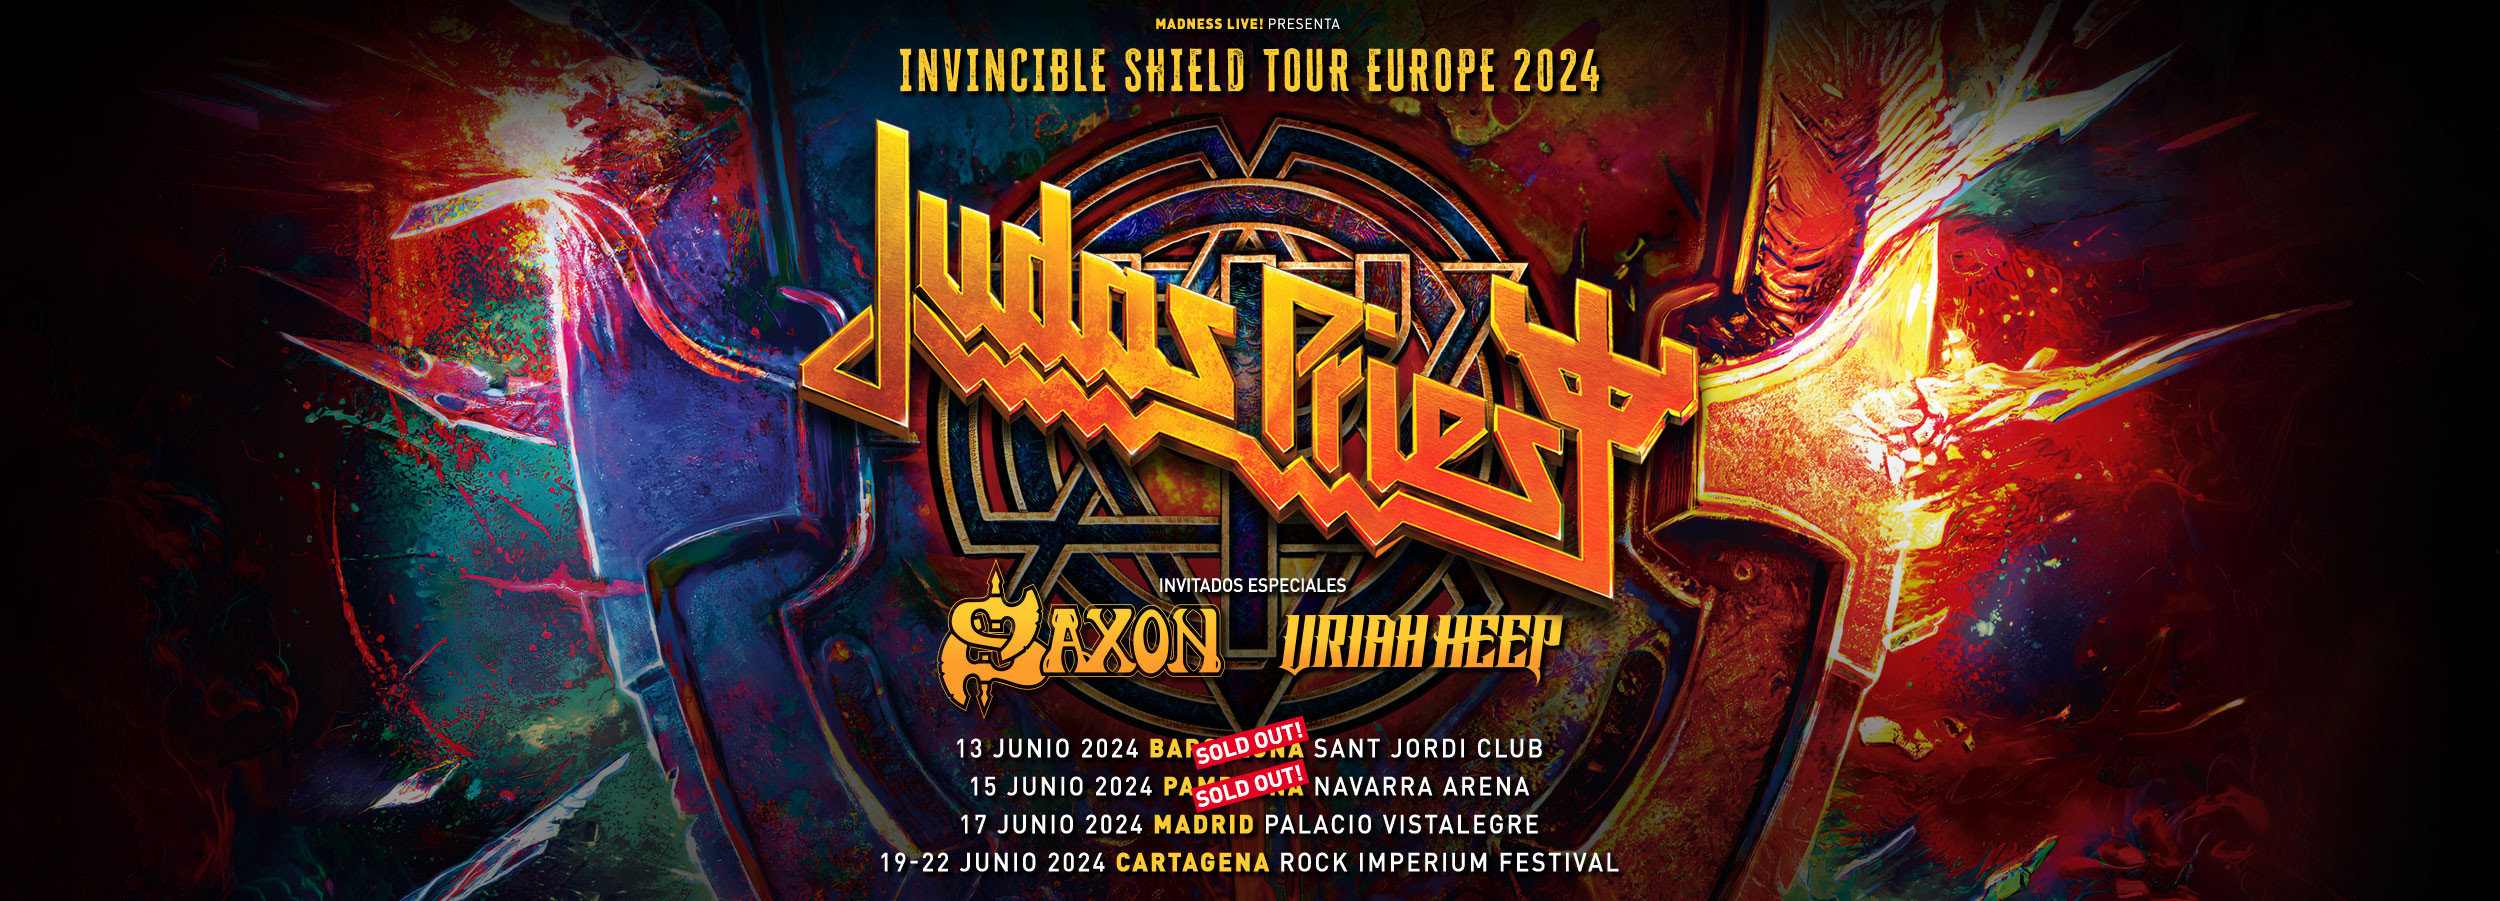 Judas Priest "Invincible Shield Tour España 2024"